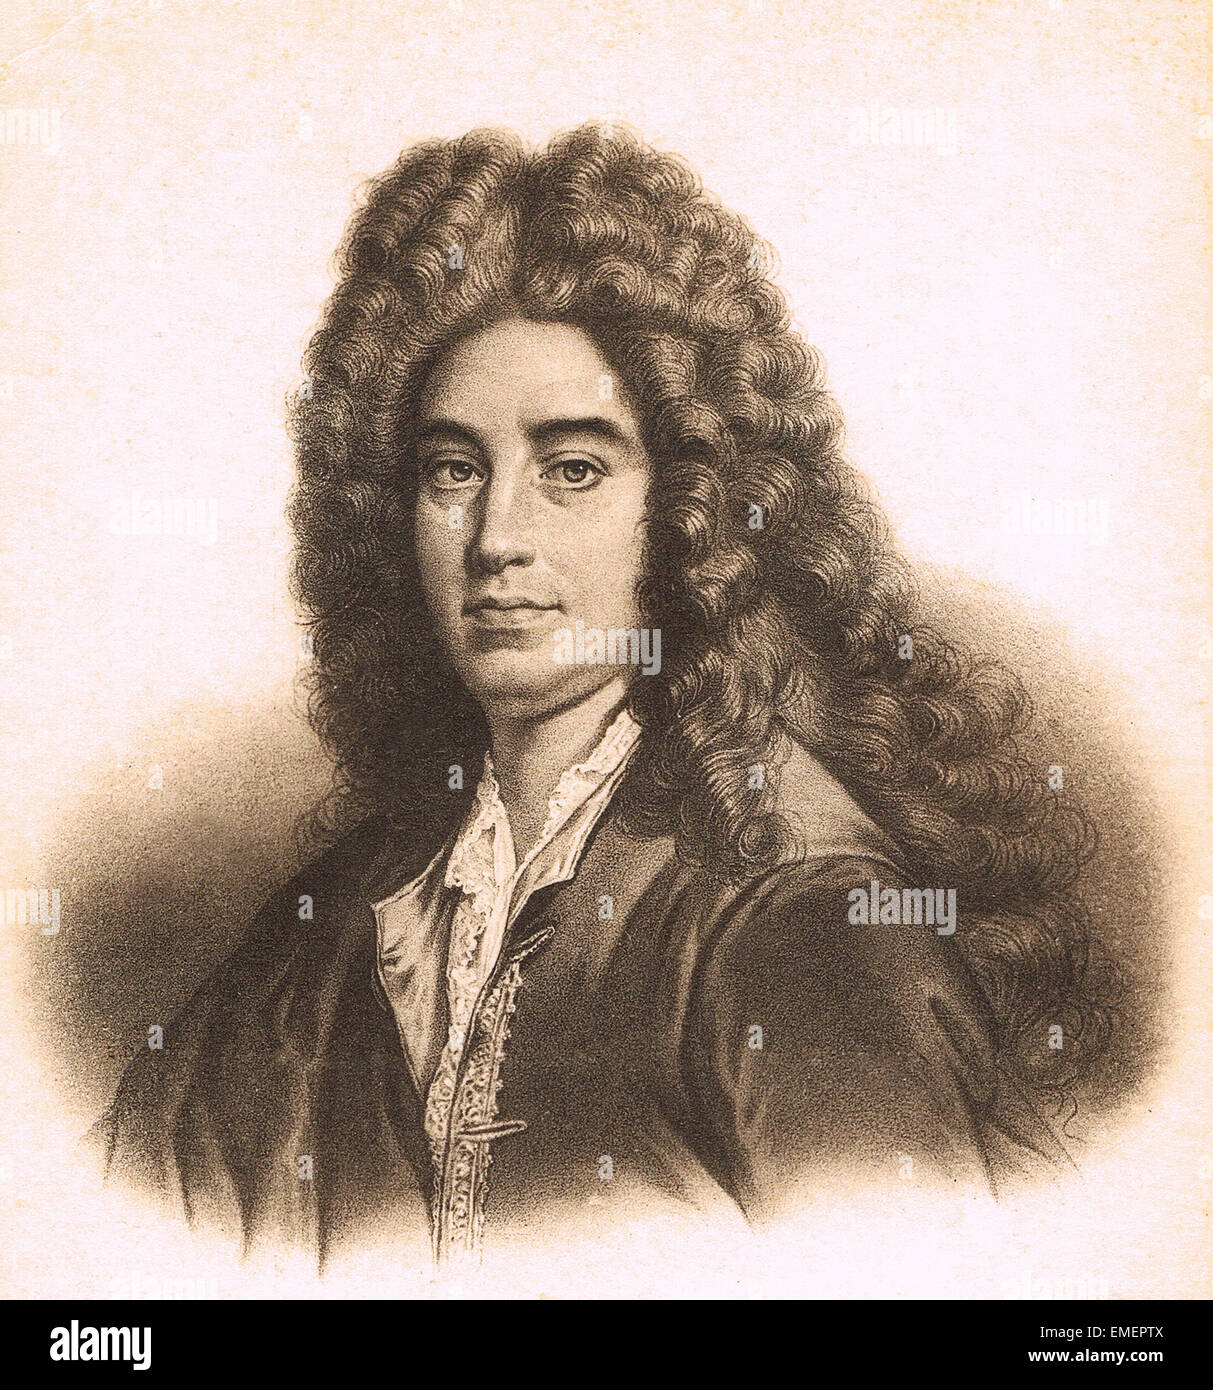 Jean De La Bruyère 1645 1696 Was A French Philosopher And Moralist